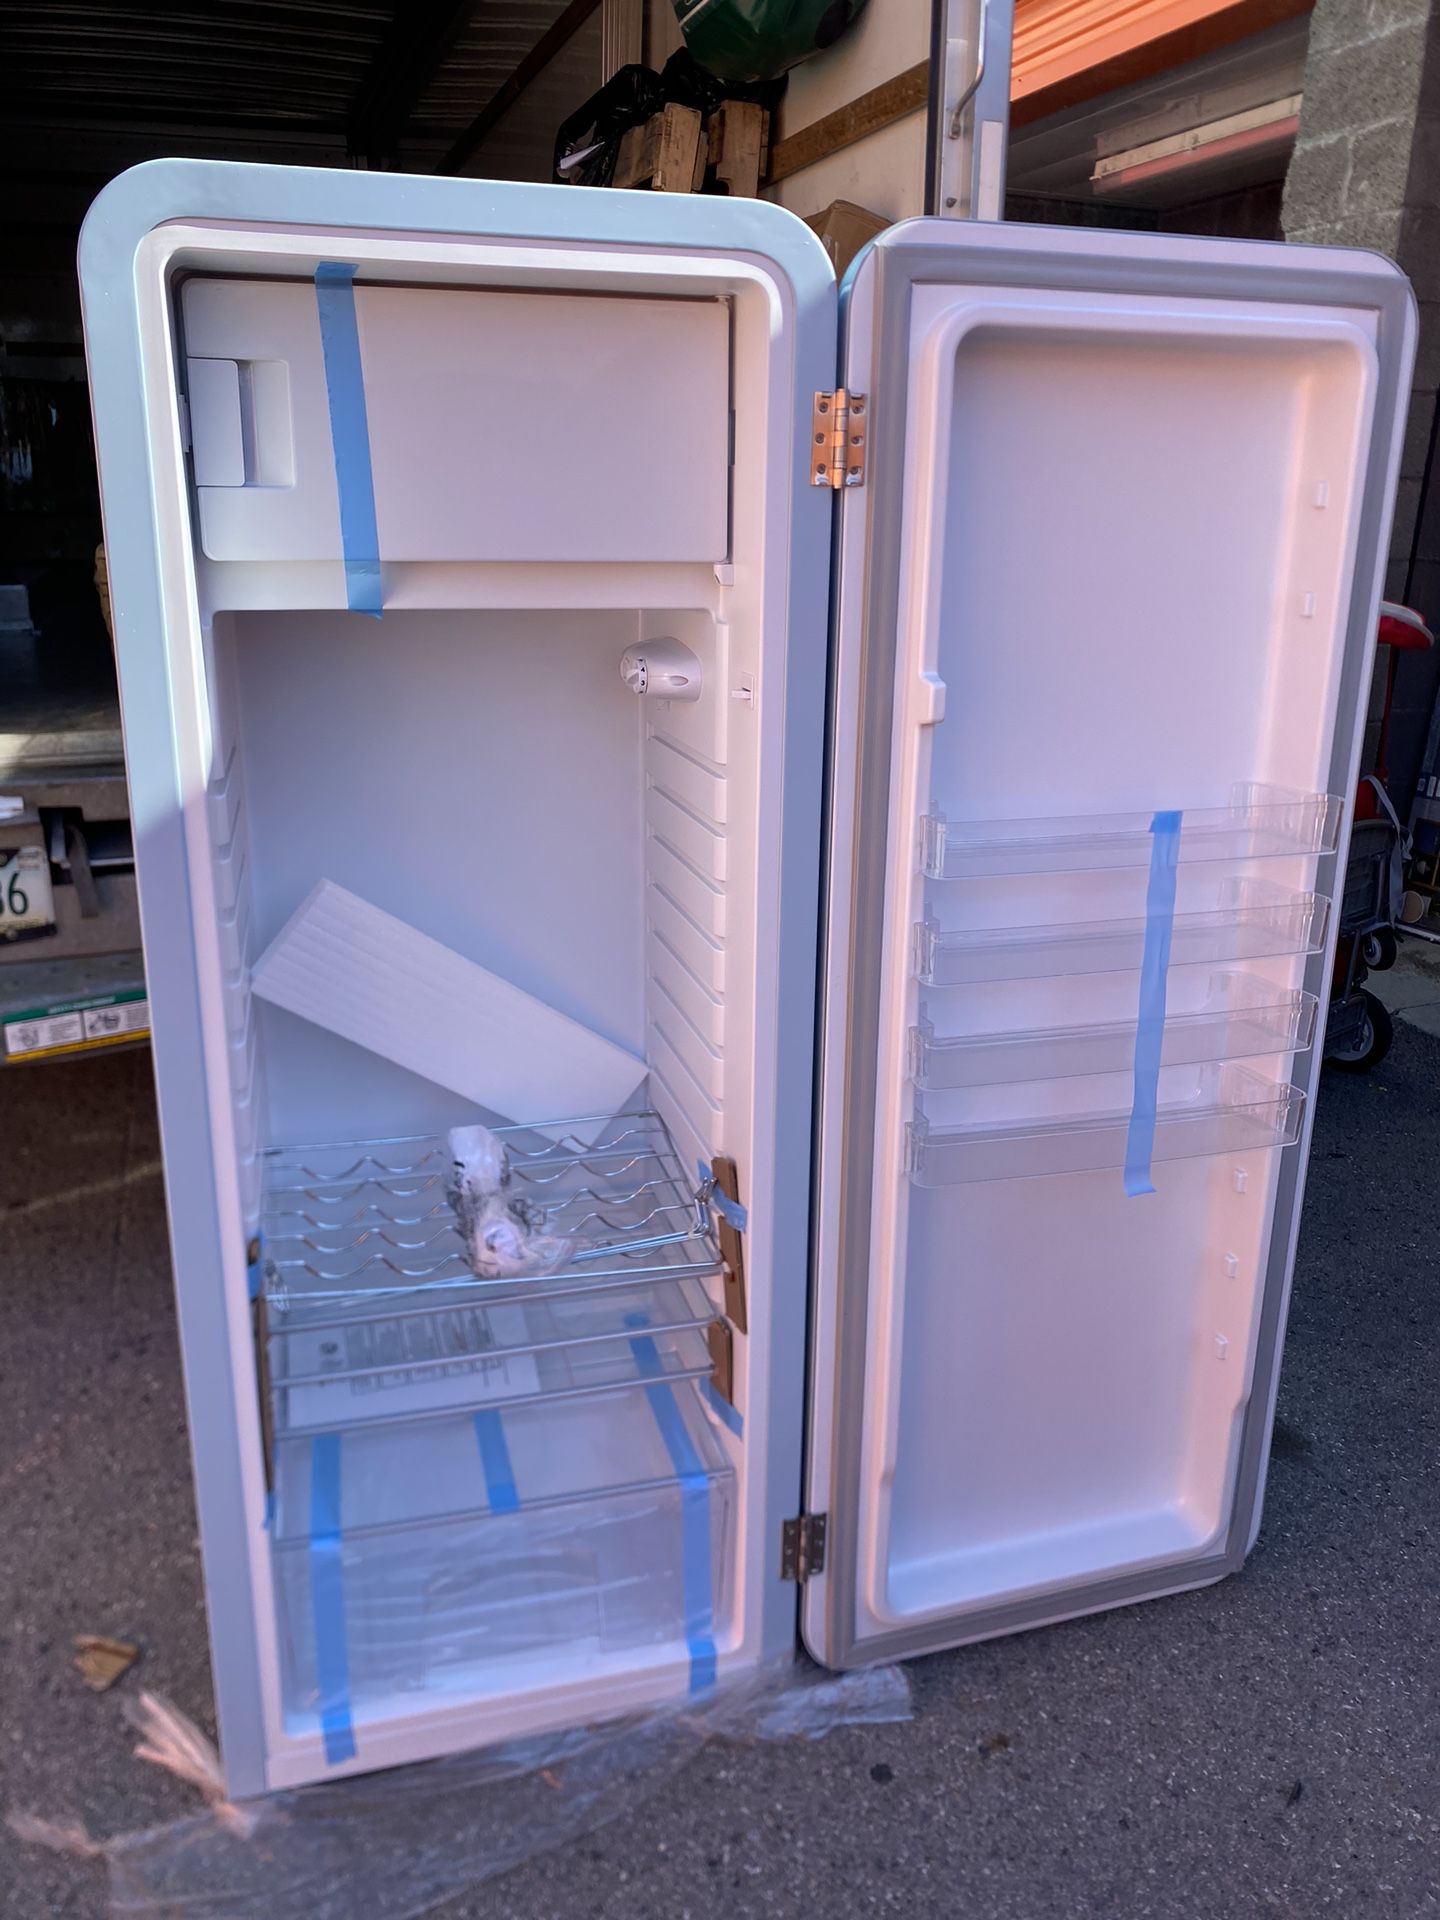 iio 10 Cu. Ft. Retro Refrigerator with Freezerette in Sky Blue - HouseTie